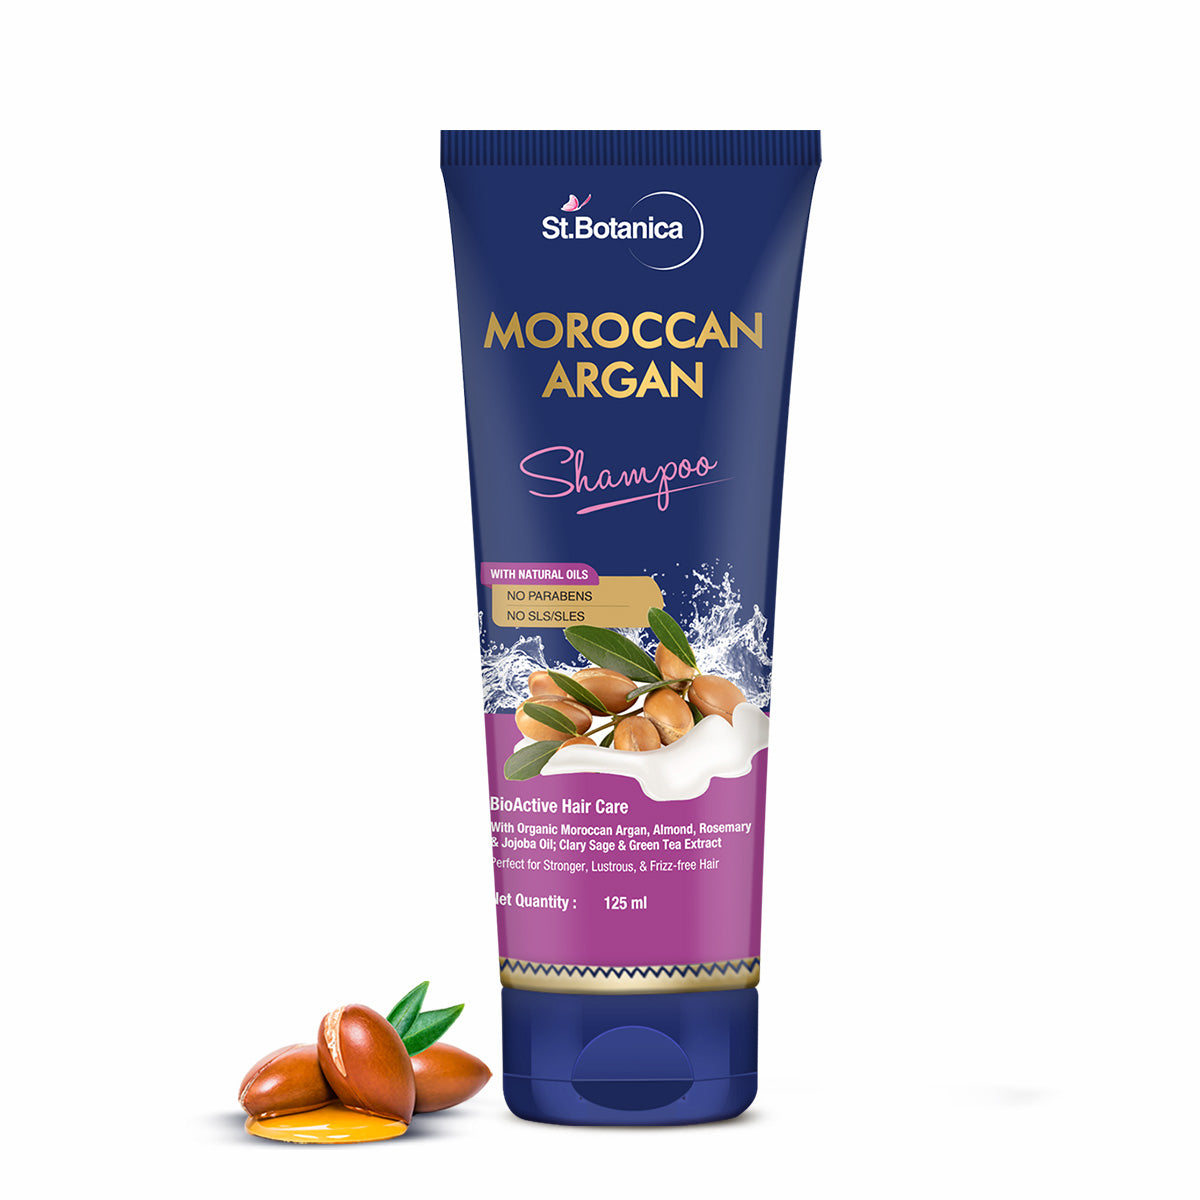 St.Botanica Moroccan Argan Hair Shampoo, 125ml with Moroccan Argan Oil to Nourish Dull & Dry Hair | Cruelty Free & Vegan | Paraben Free | No SLS/SLES